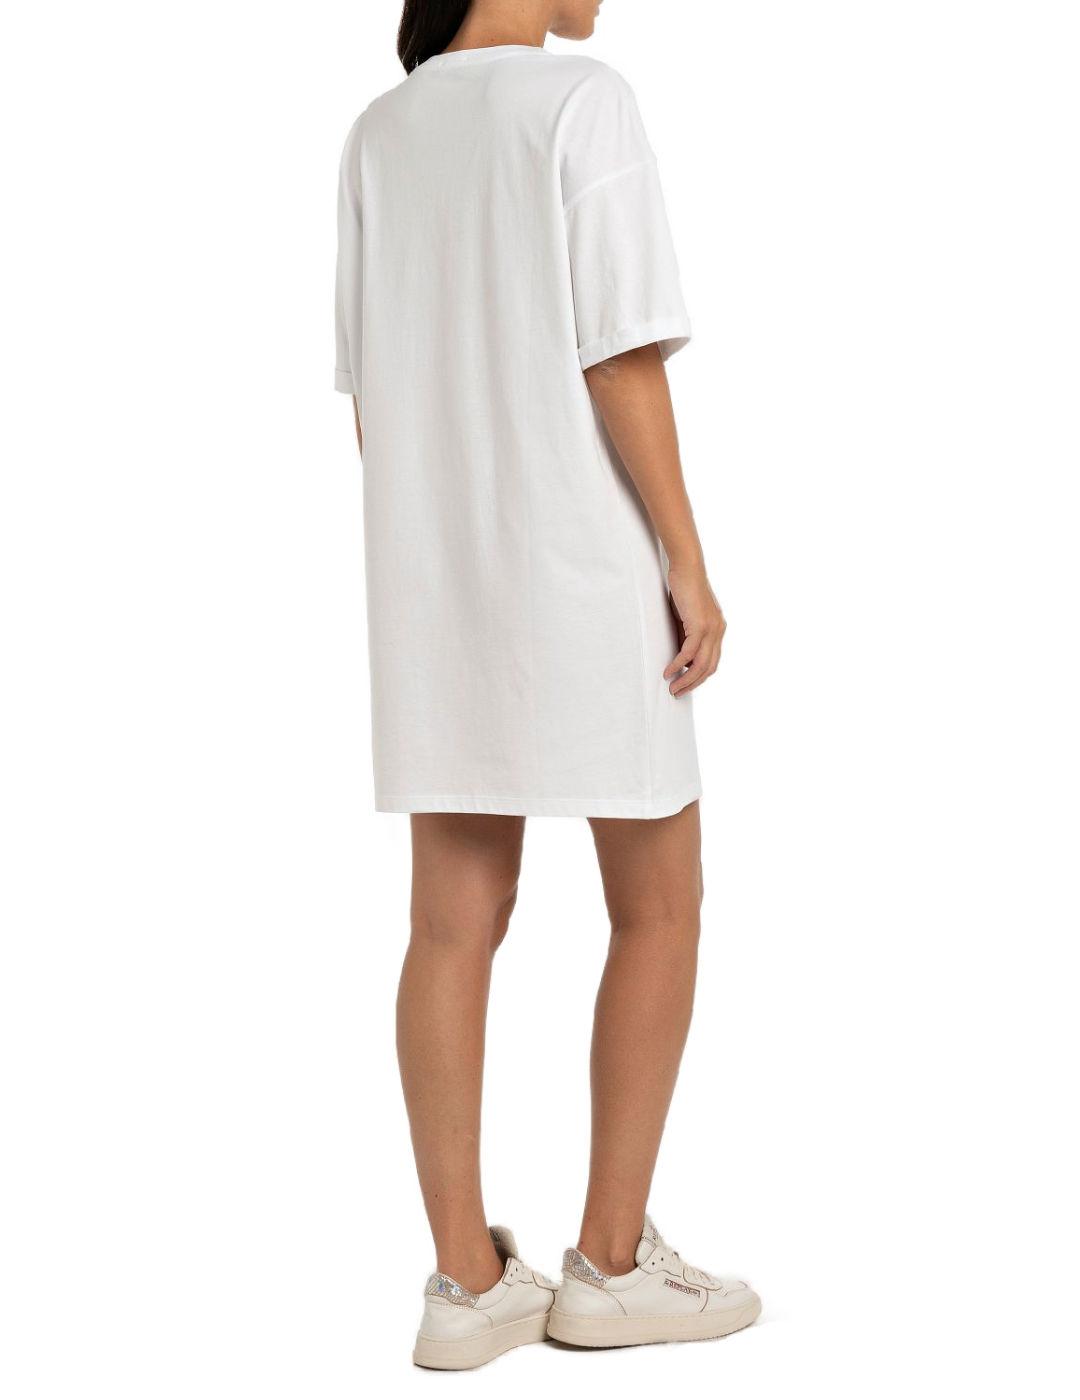 Camiseta Replay blanca efecto desgastado manga corta mujer